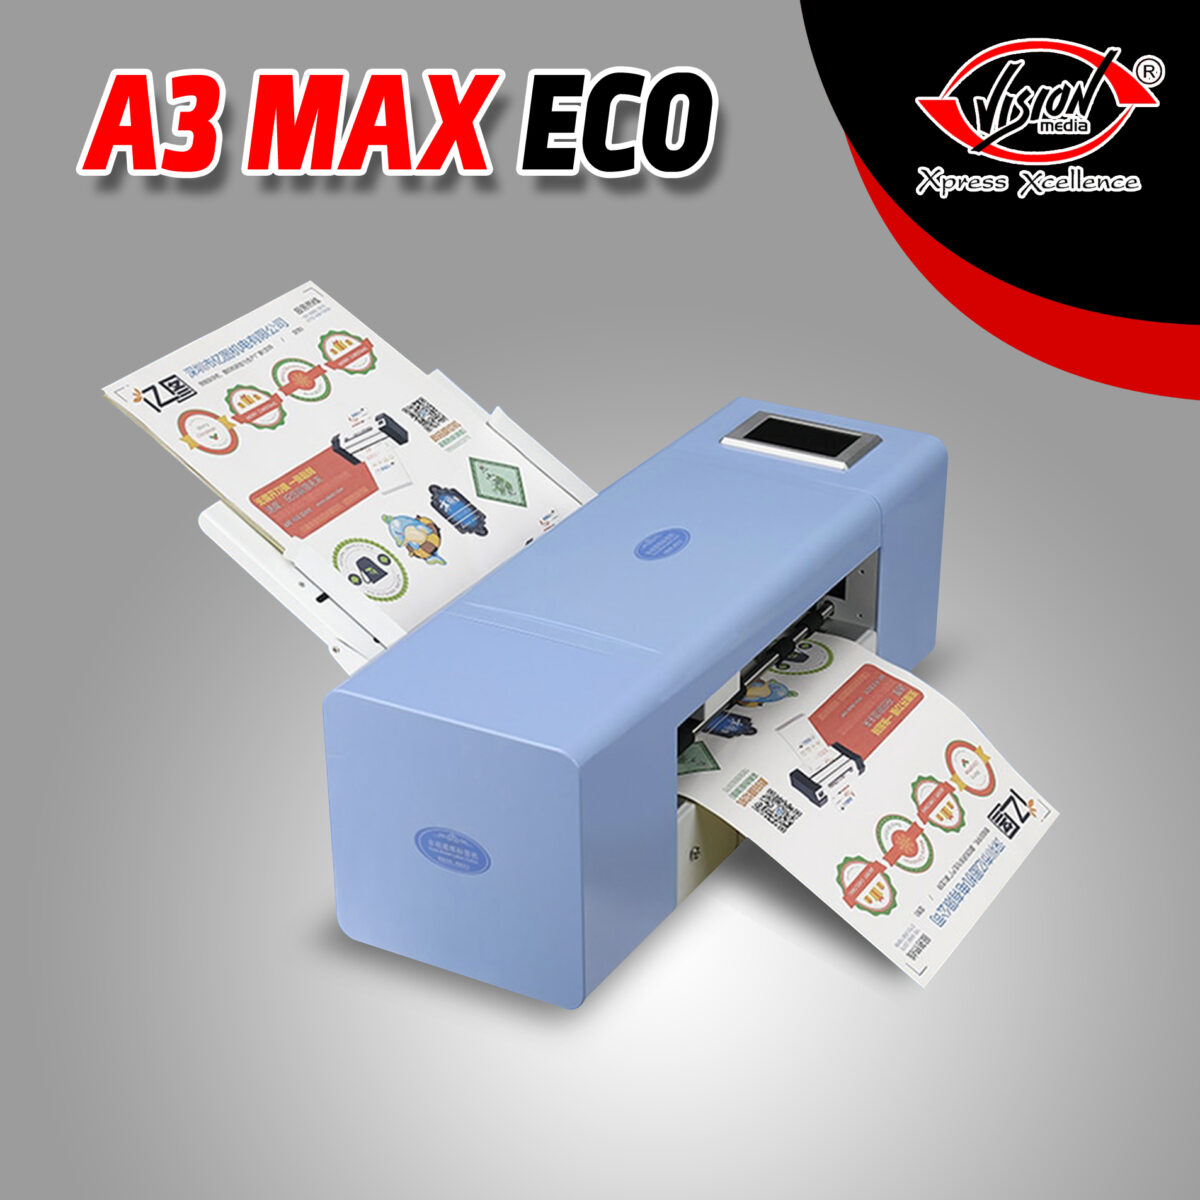 A3 Max Eco Sticker Cutting Plotter